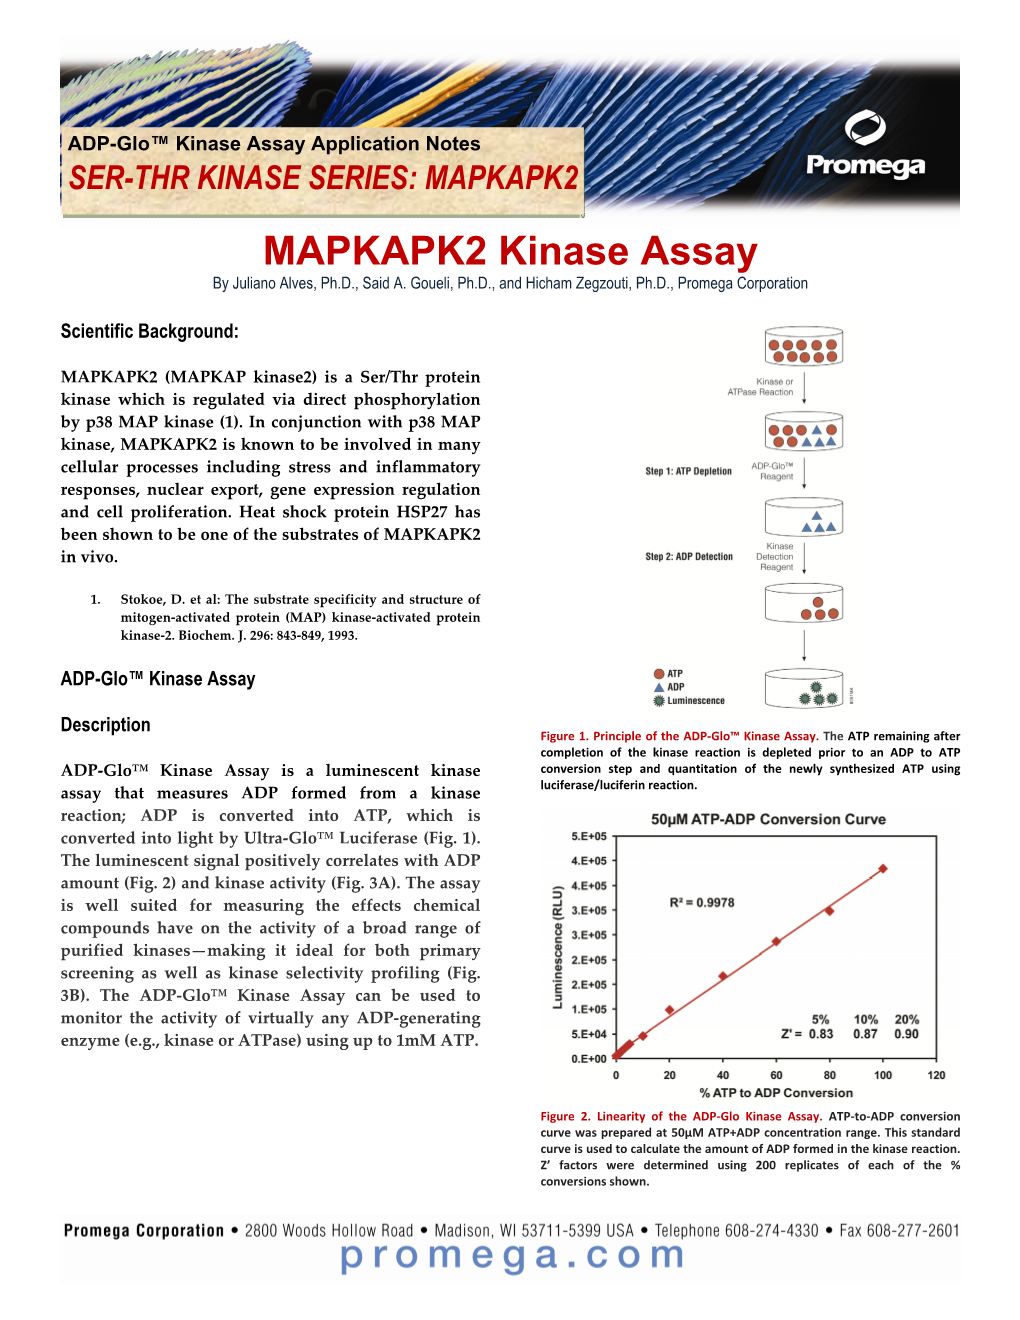 MAPKAPK2 Kinase Assay by Juliano Alves, Ph.D., Said A